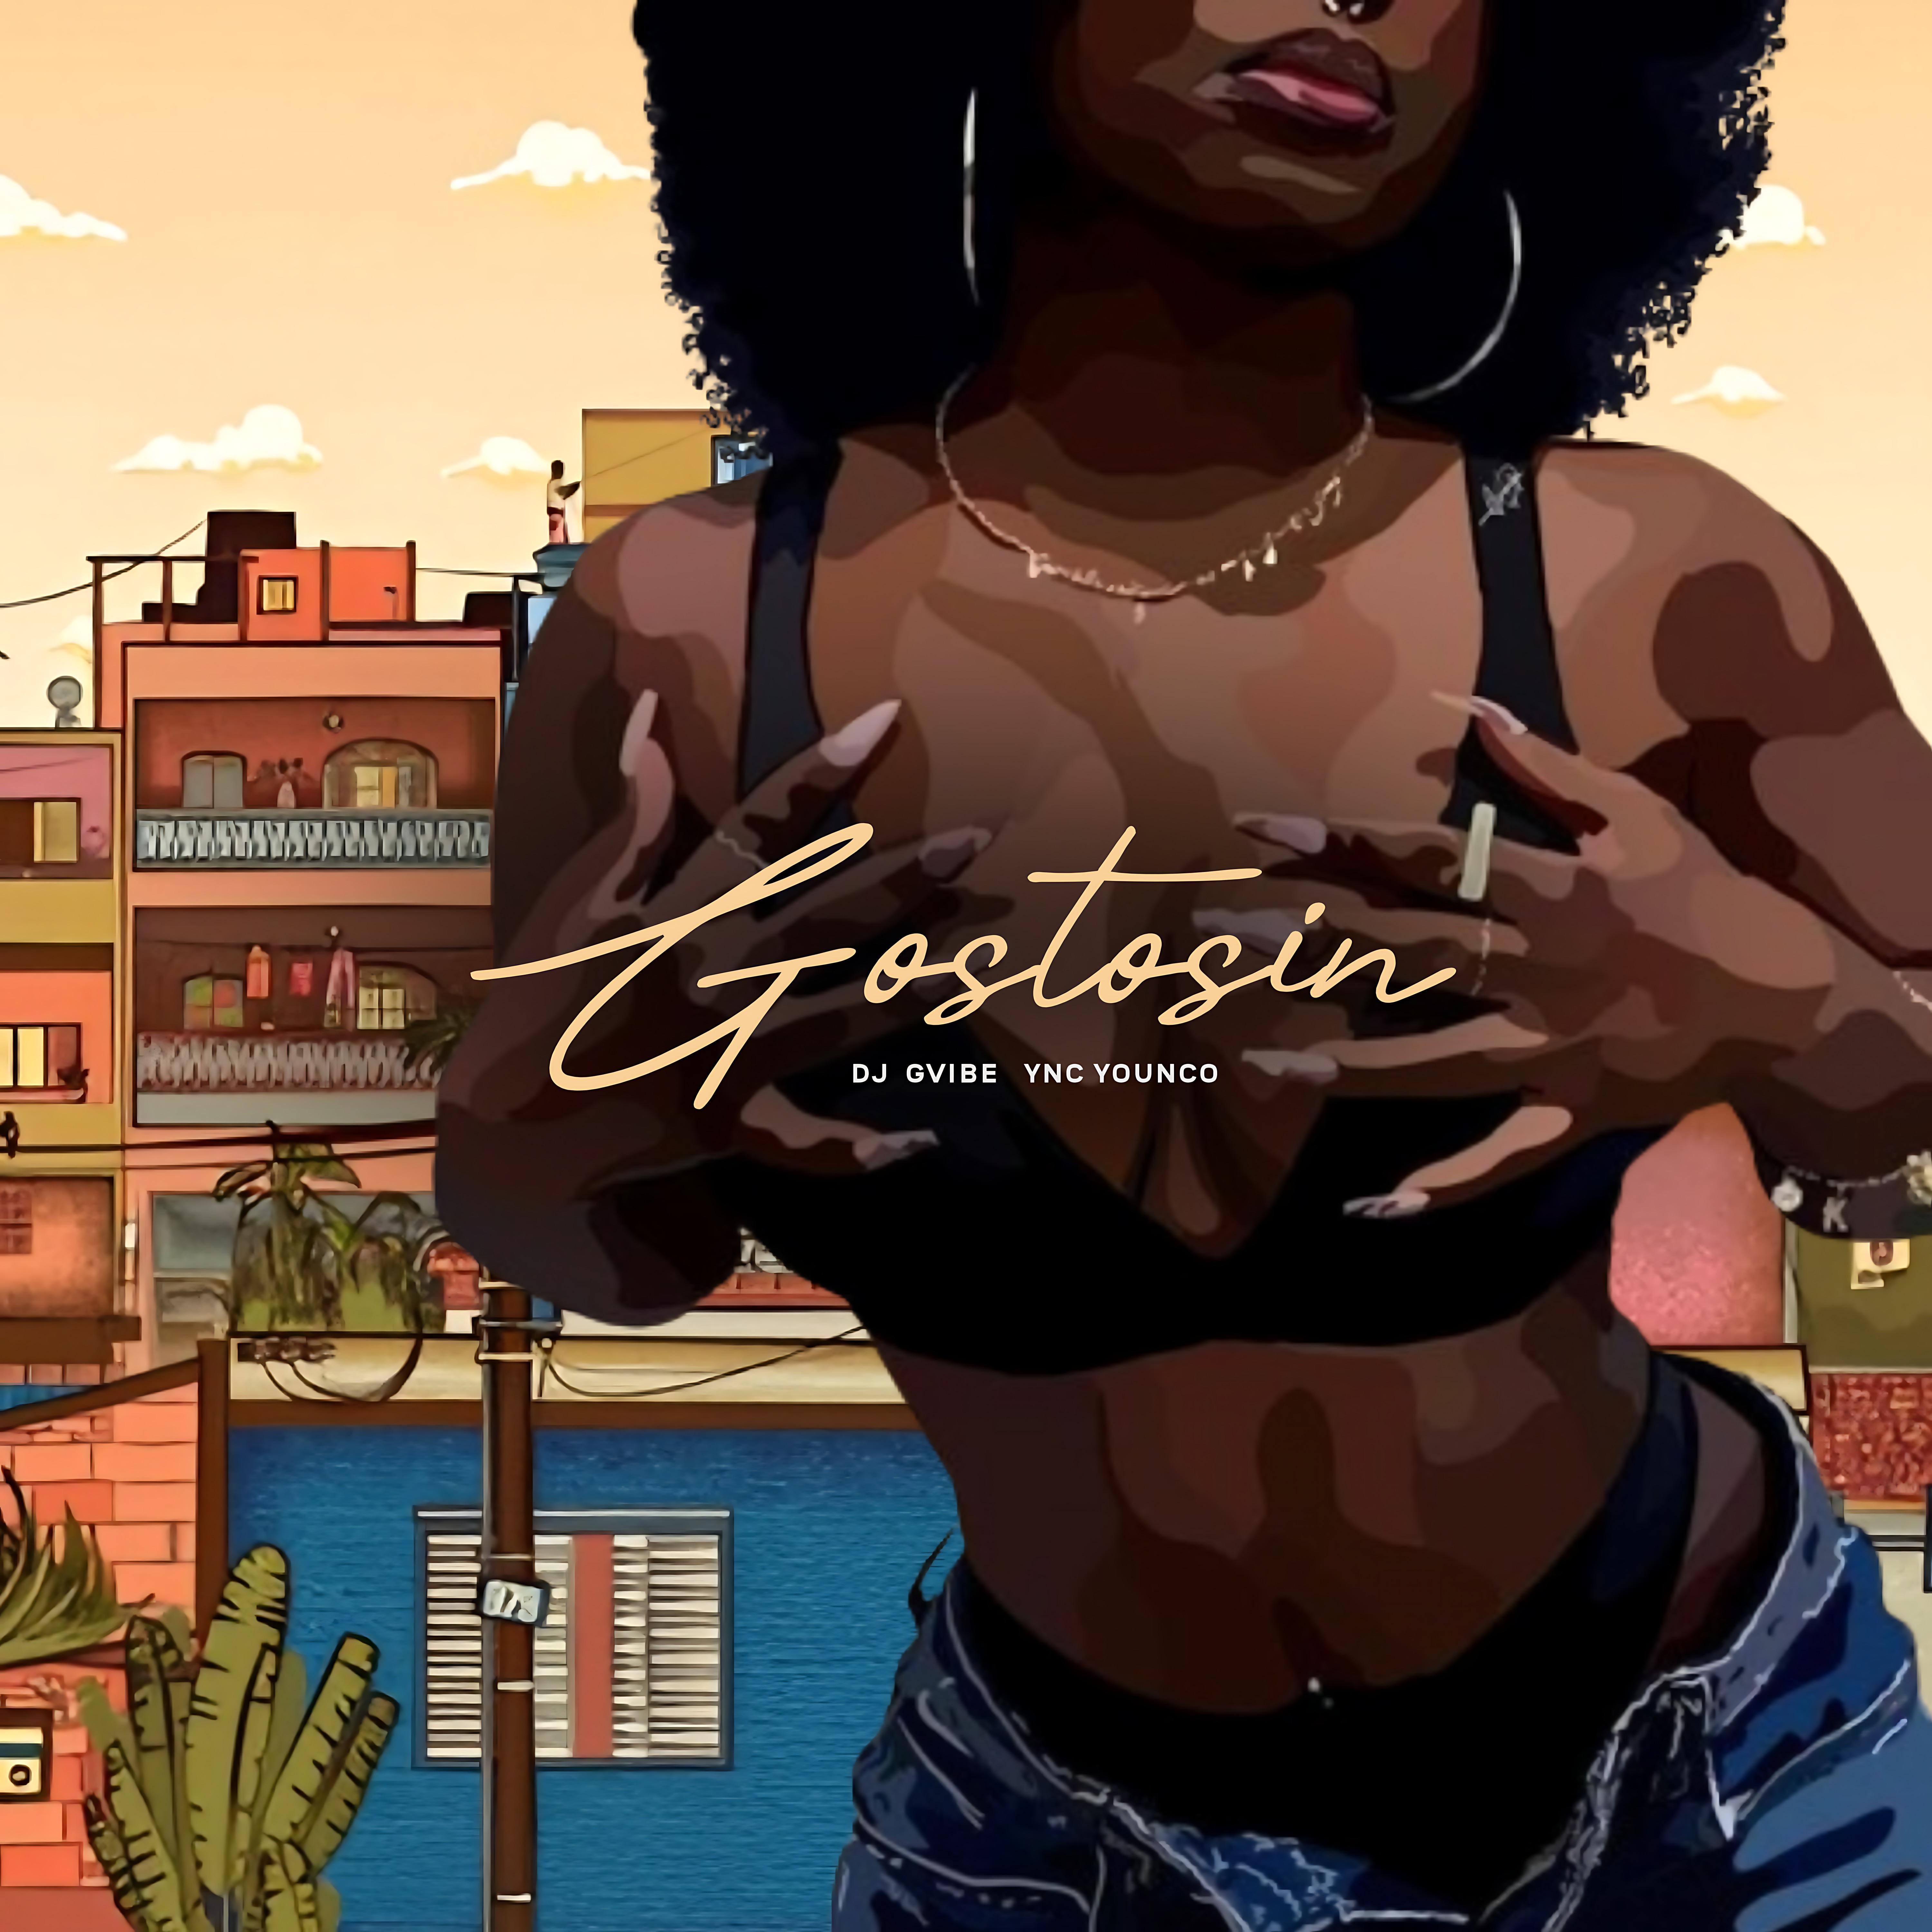 Постер альбома Gostosin